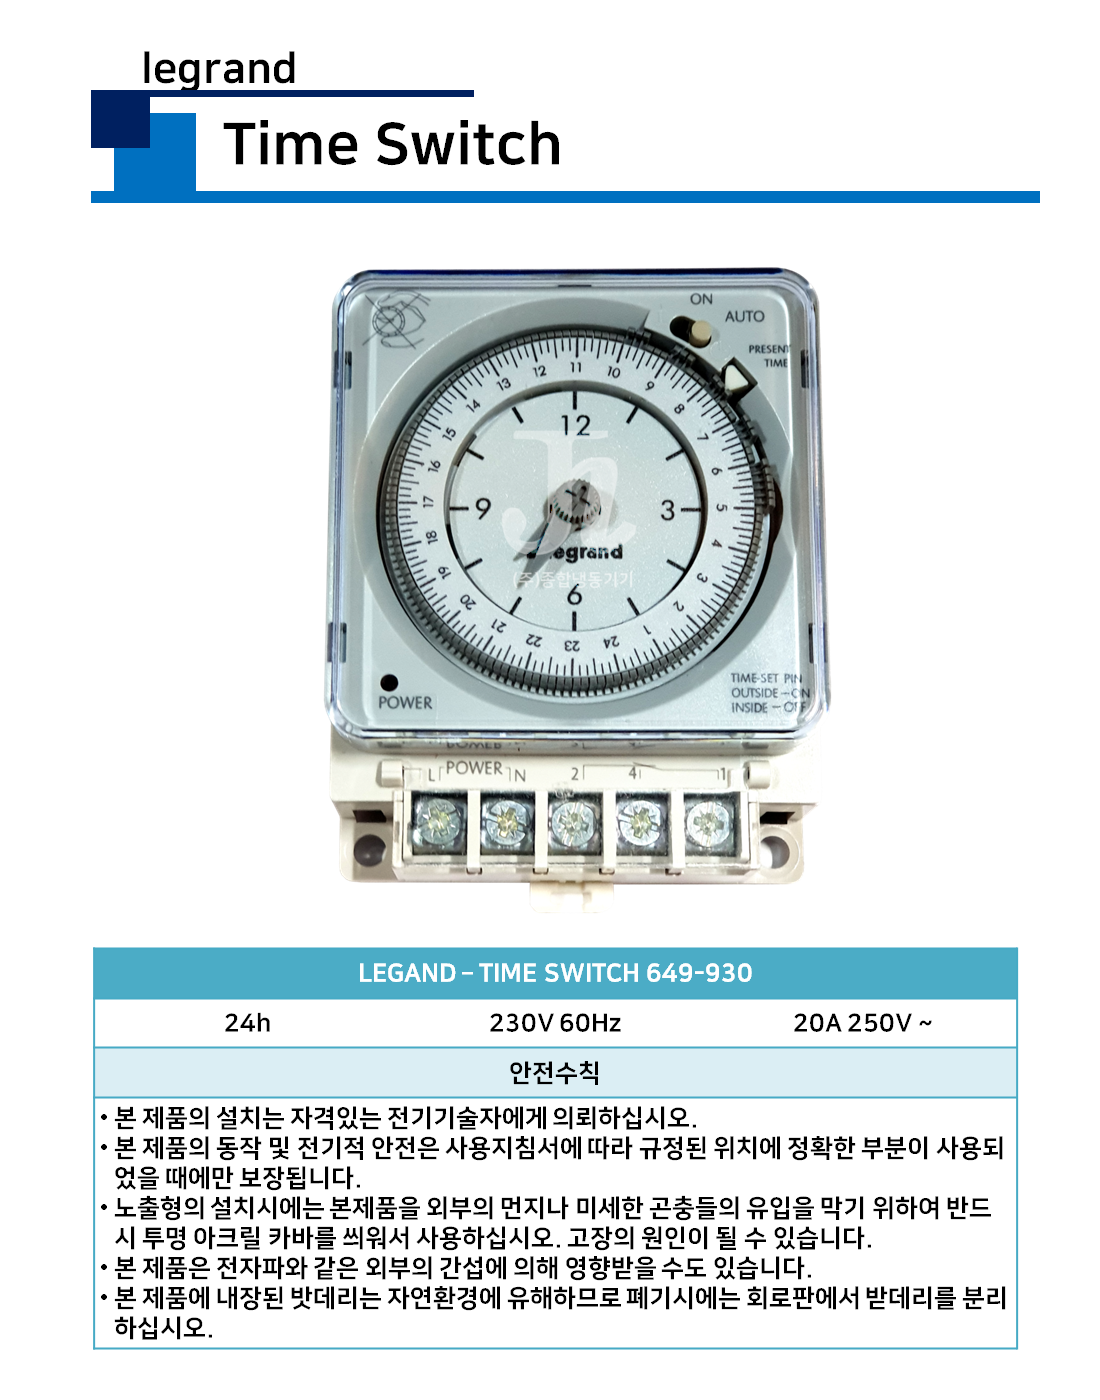 LEGRAND-타임스위치 (Time Switch)